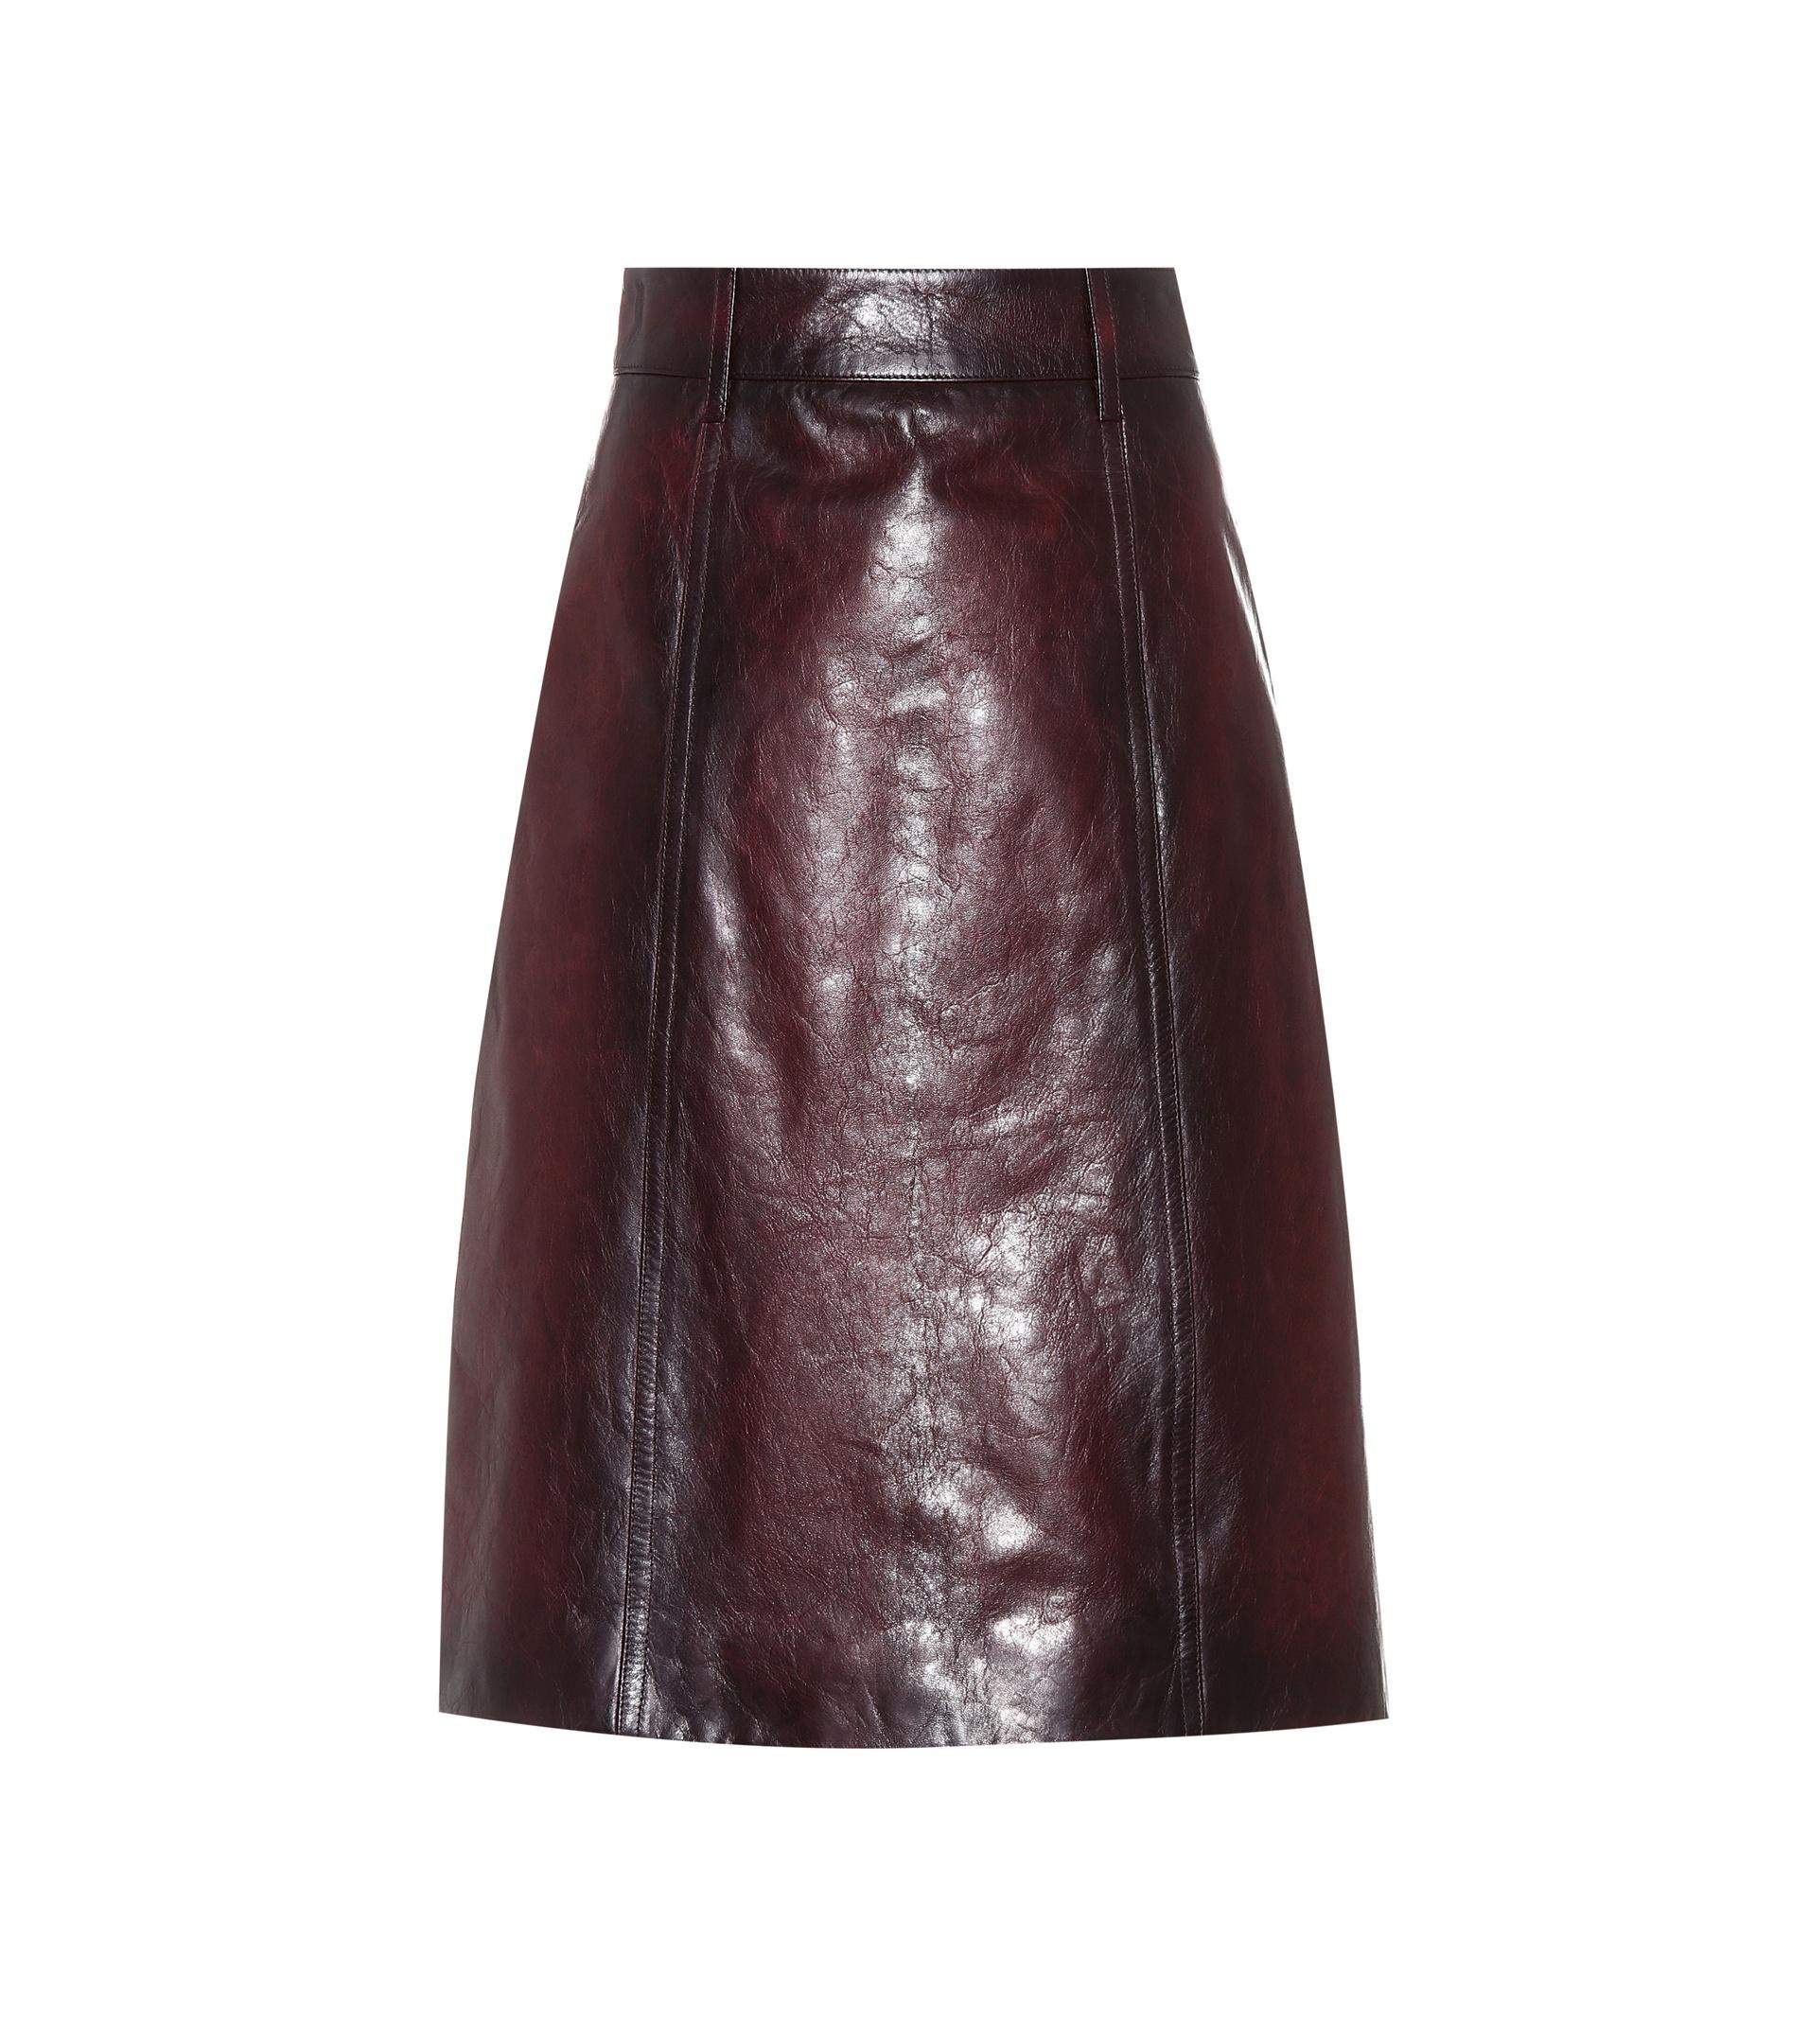 Lyst - Prada Leather Skirt in Brown